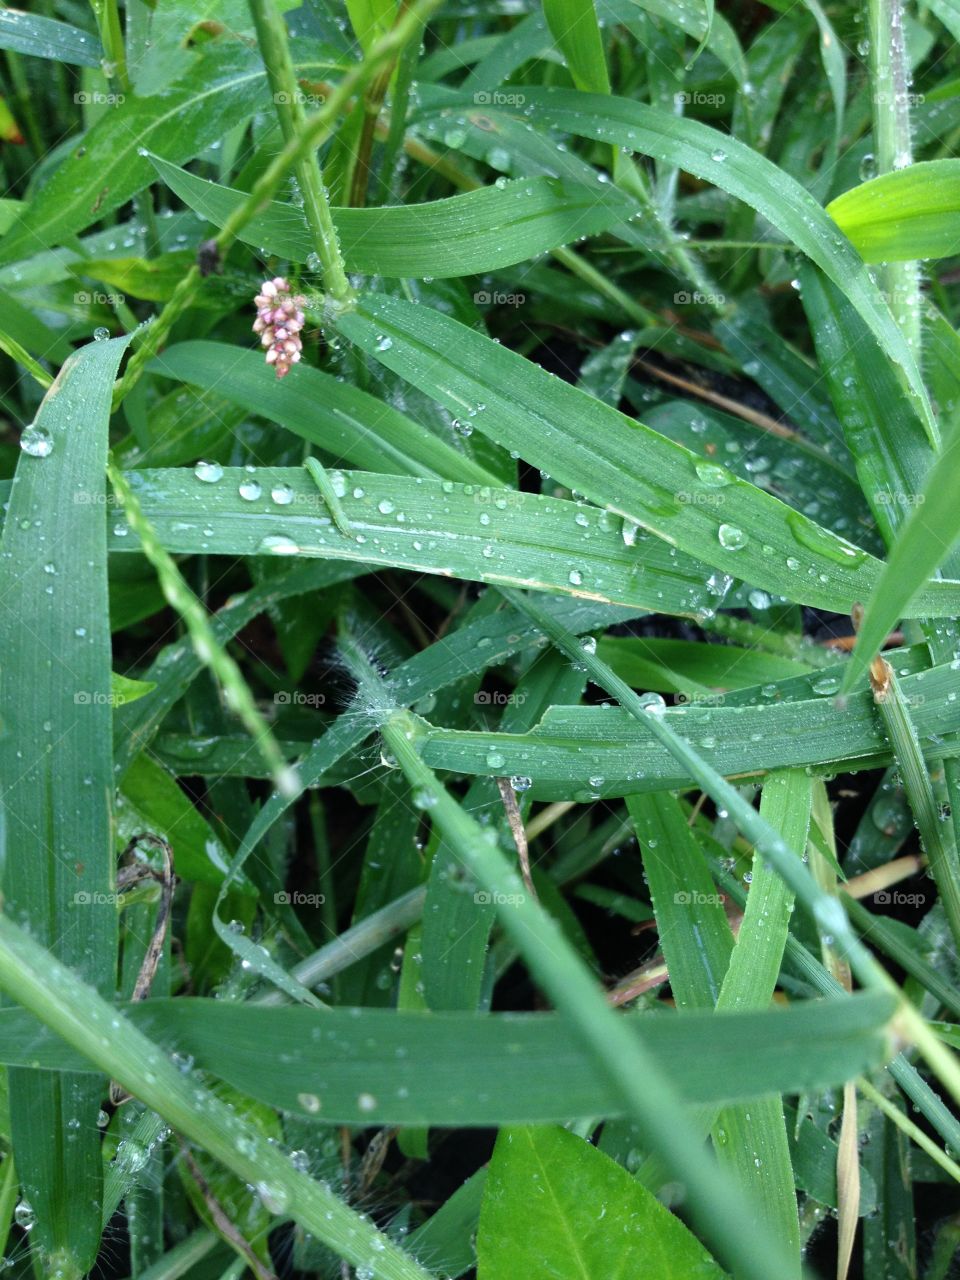 Rain drops on blades of grass. 